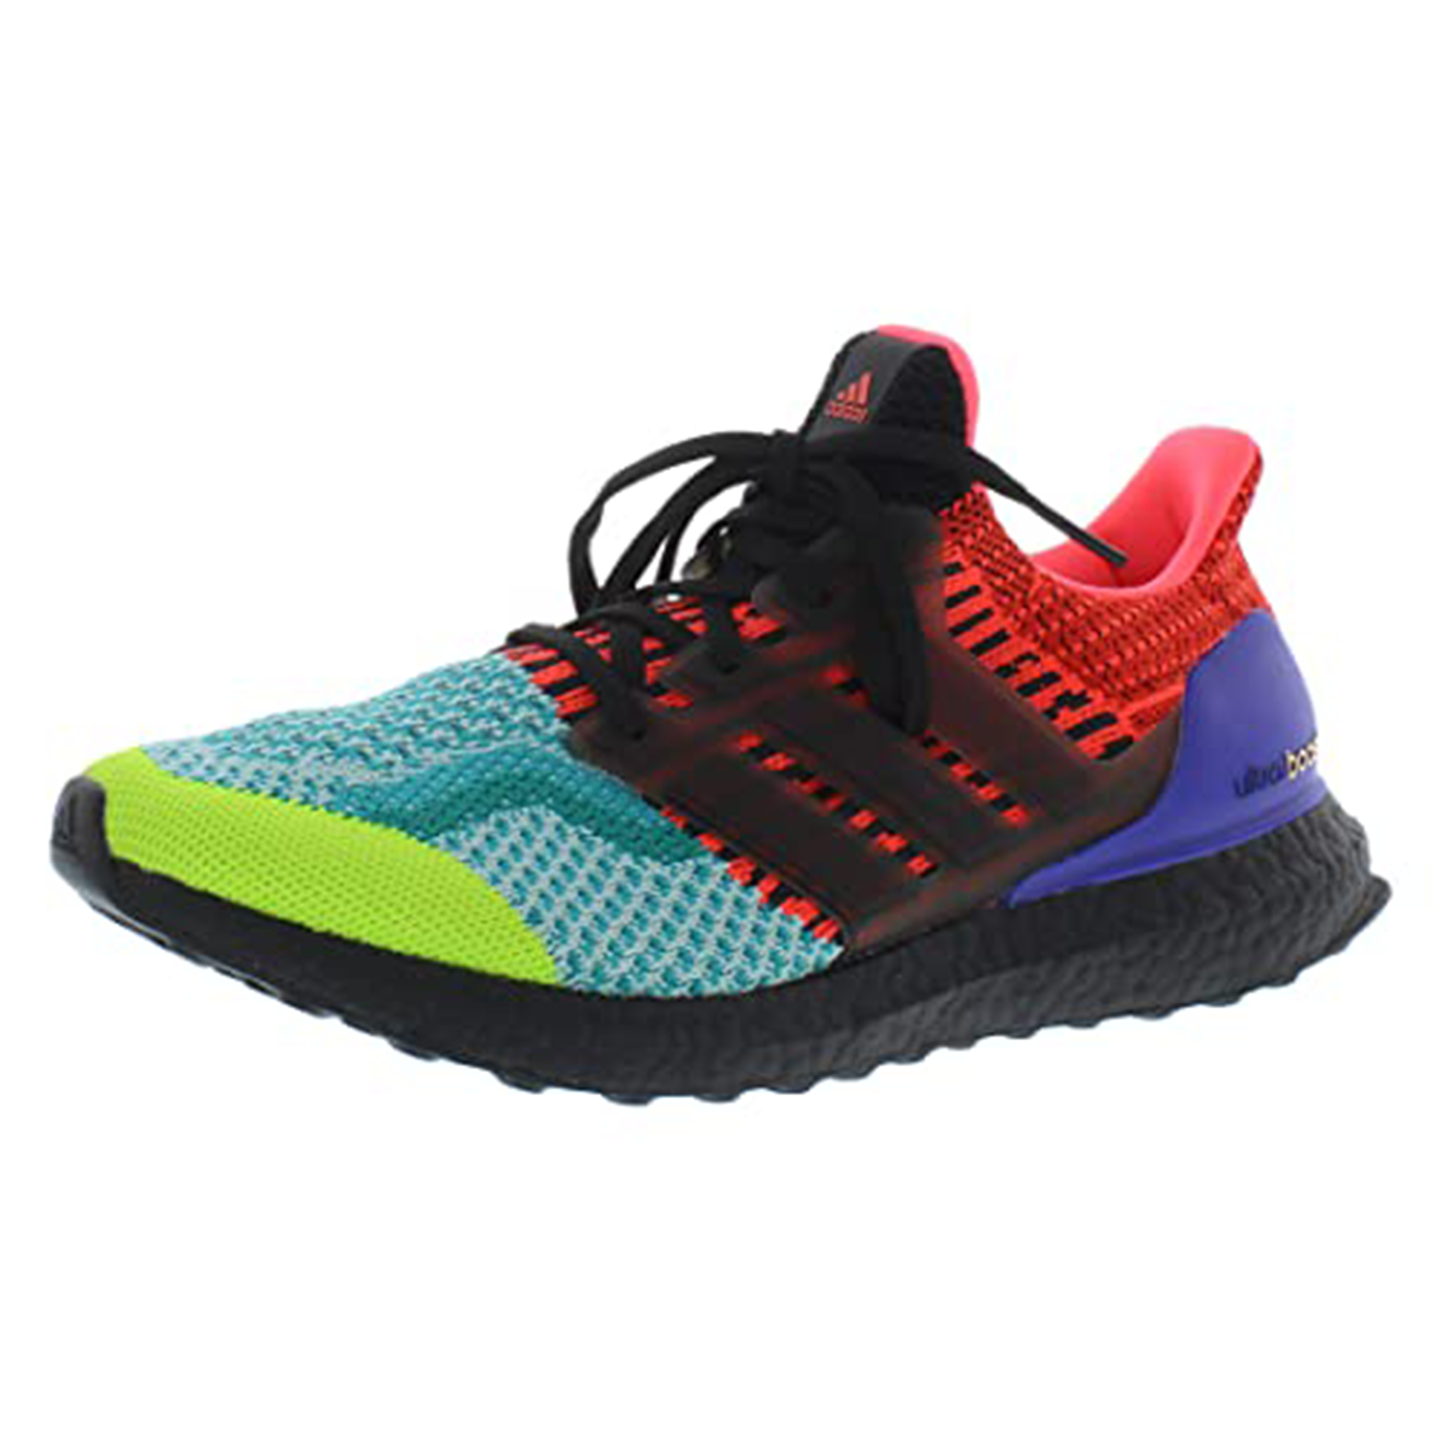 adidas Men's Ultraboost DNA Shoes, Solar Slime/Core Black/Night Flash